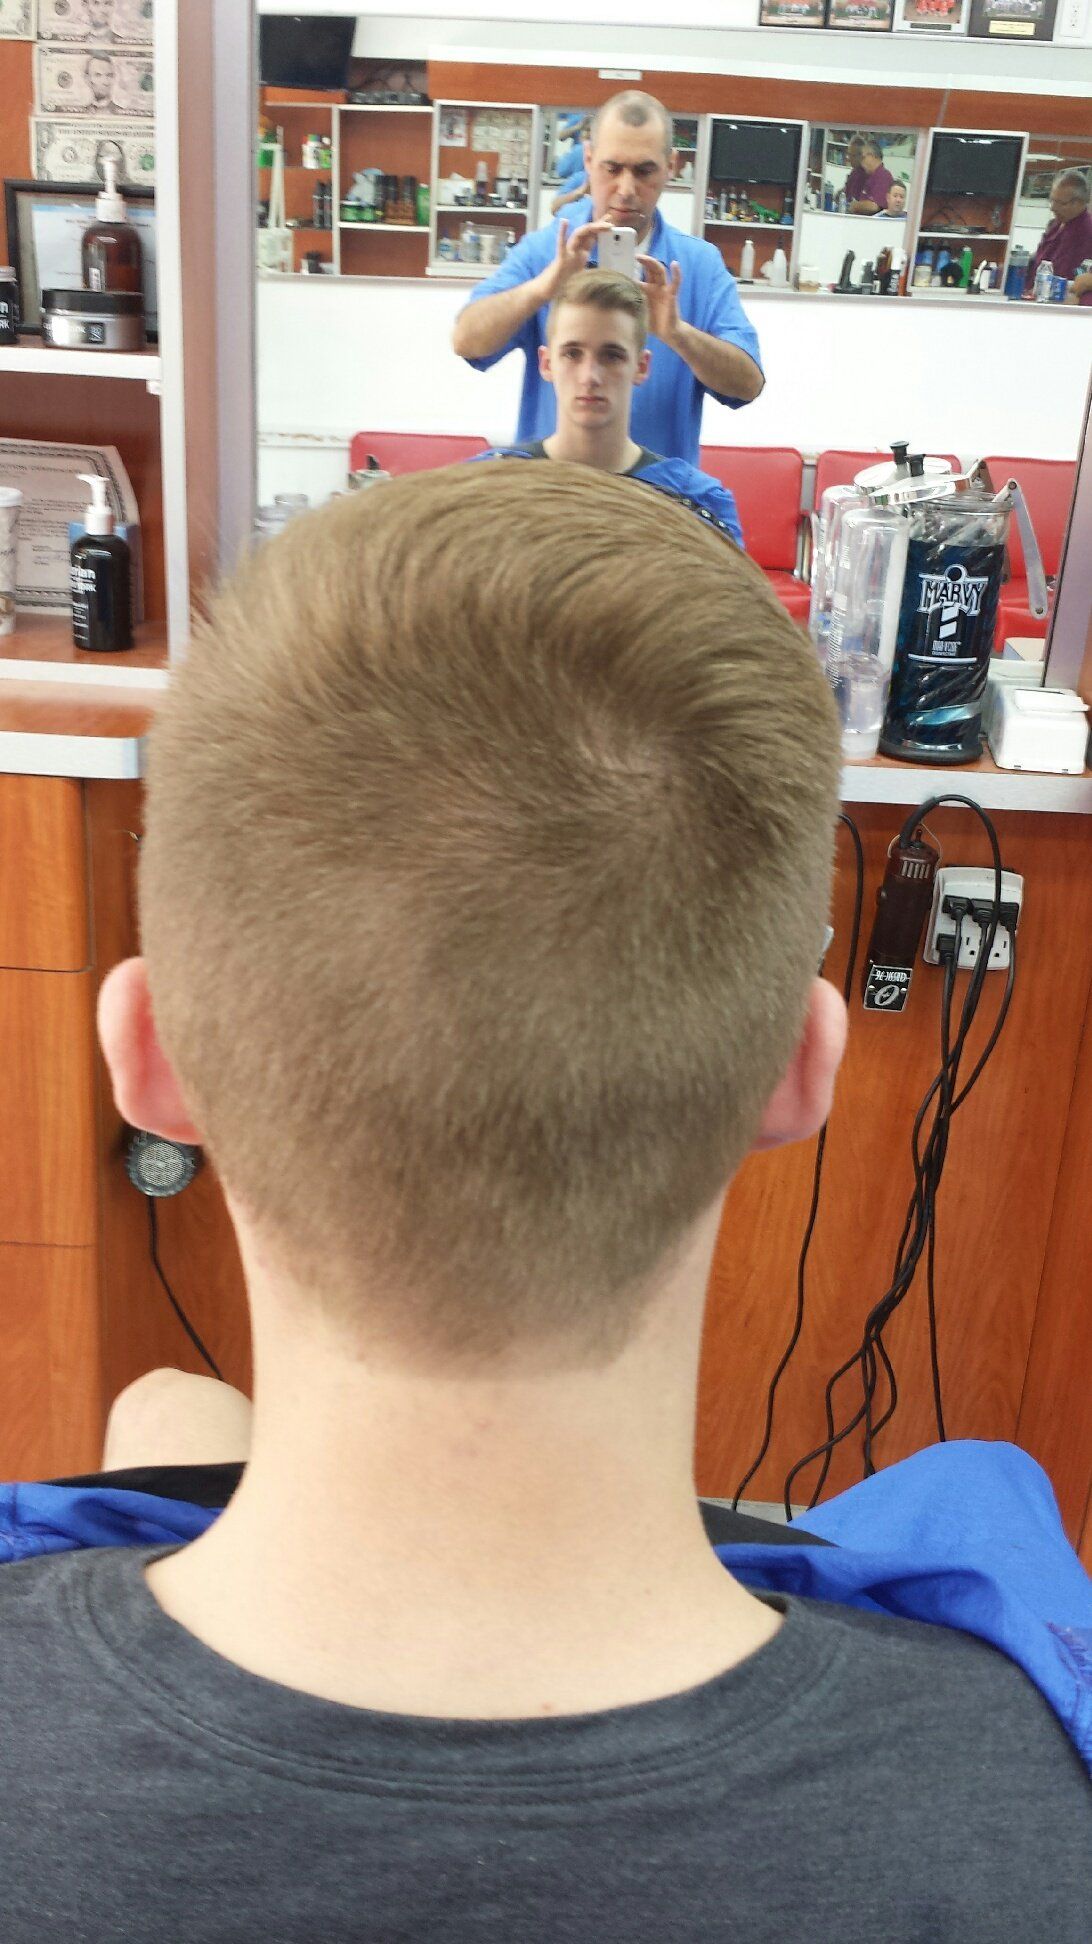 Men's hair cut